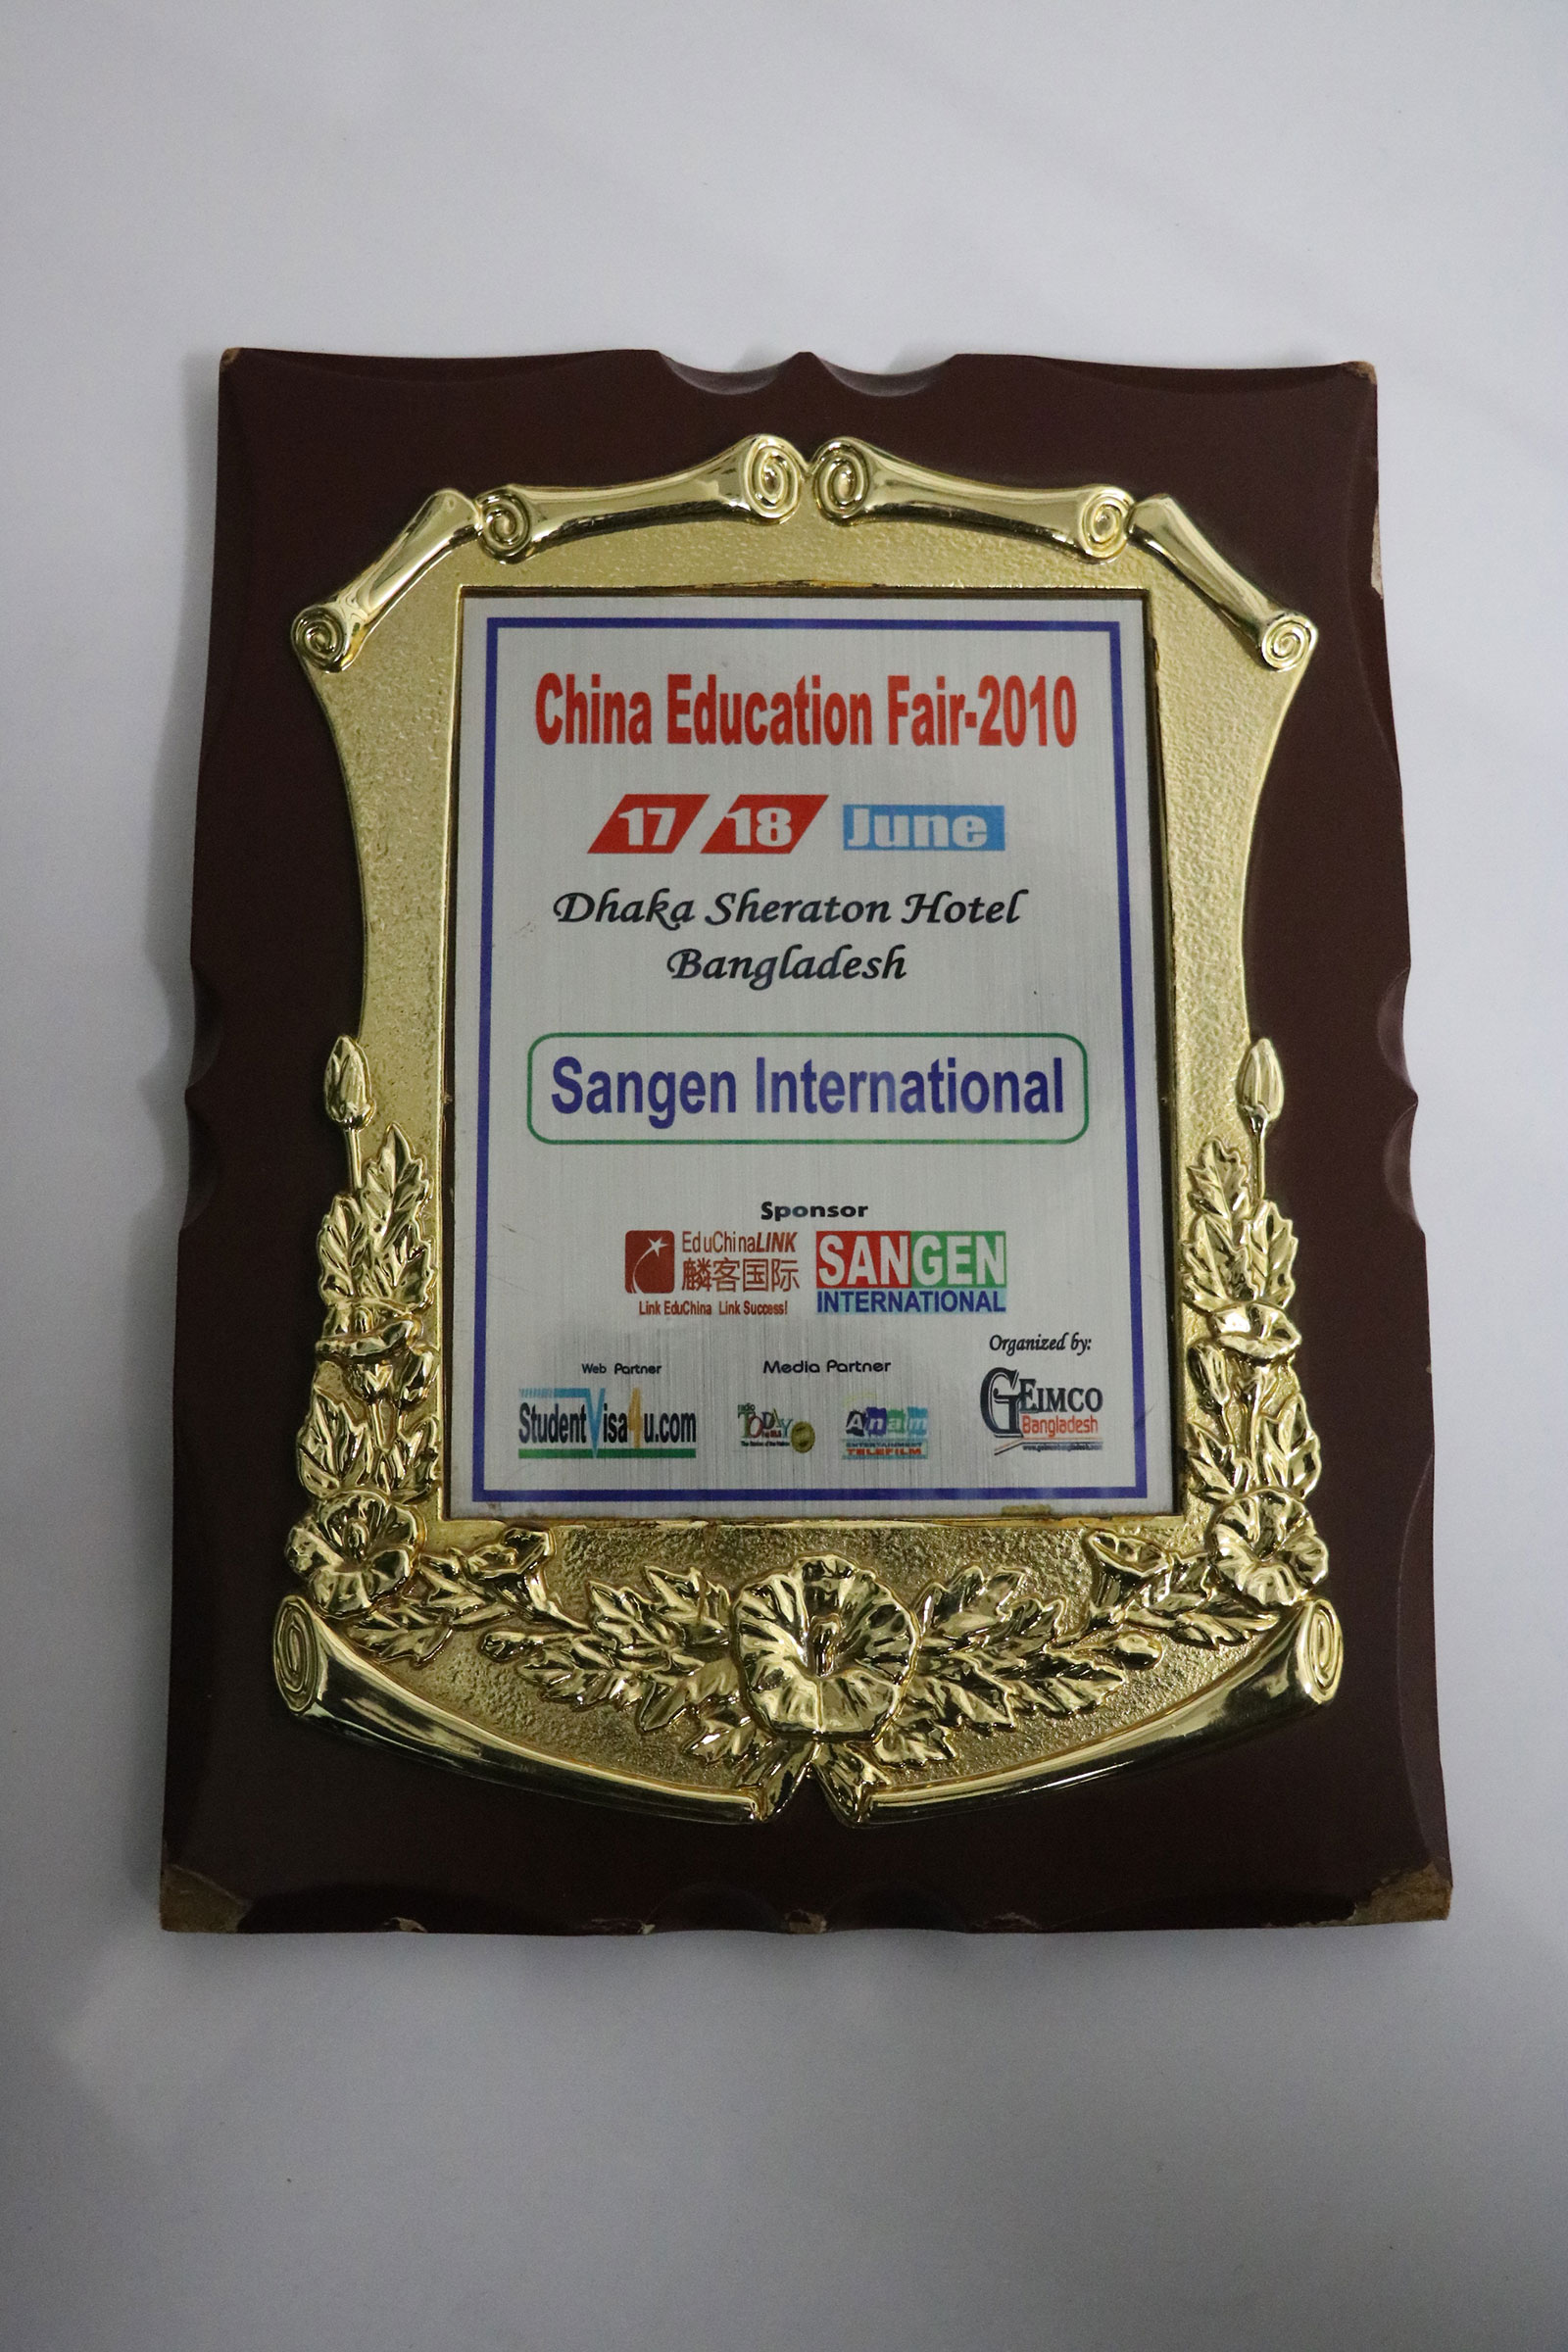 China Education Fair 2010, Dhaka Sheraton Hotel Bangladesh